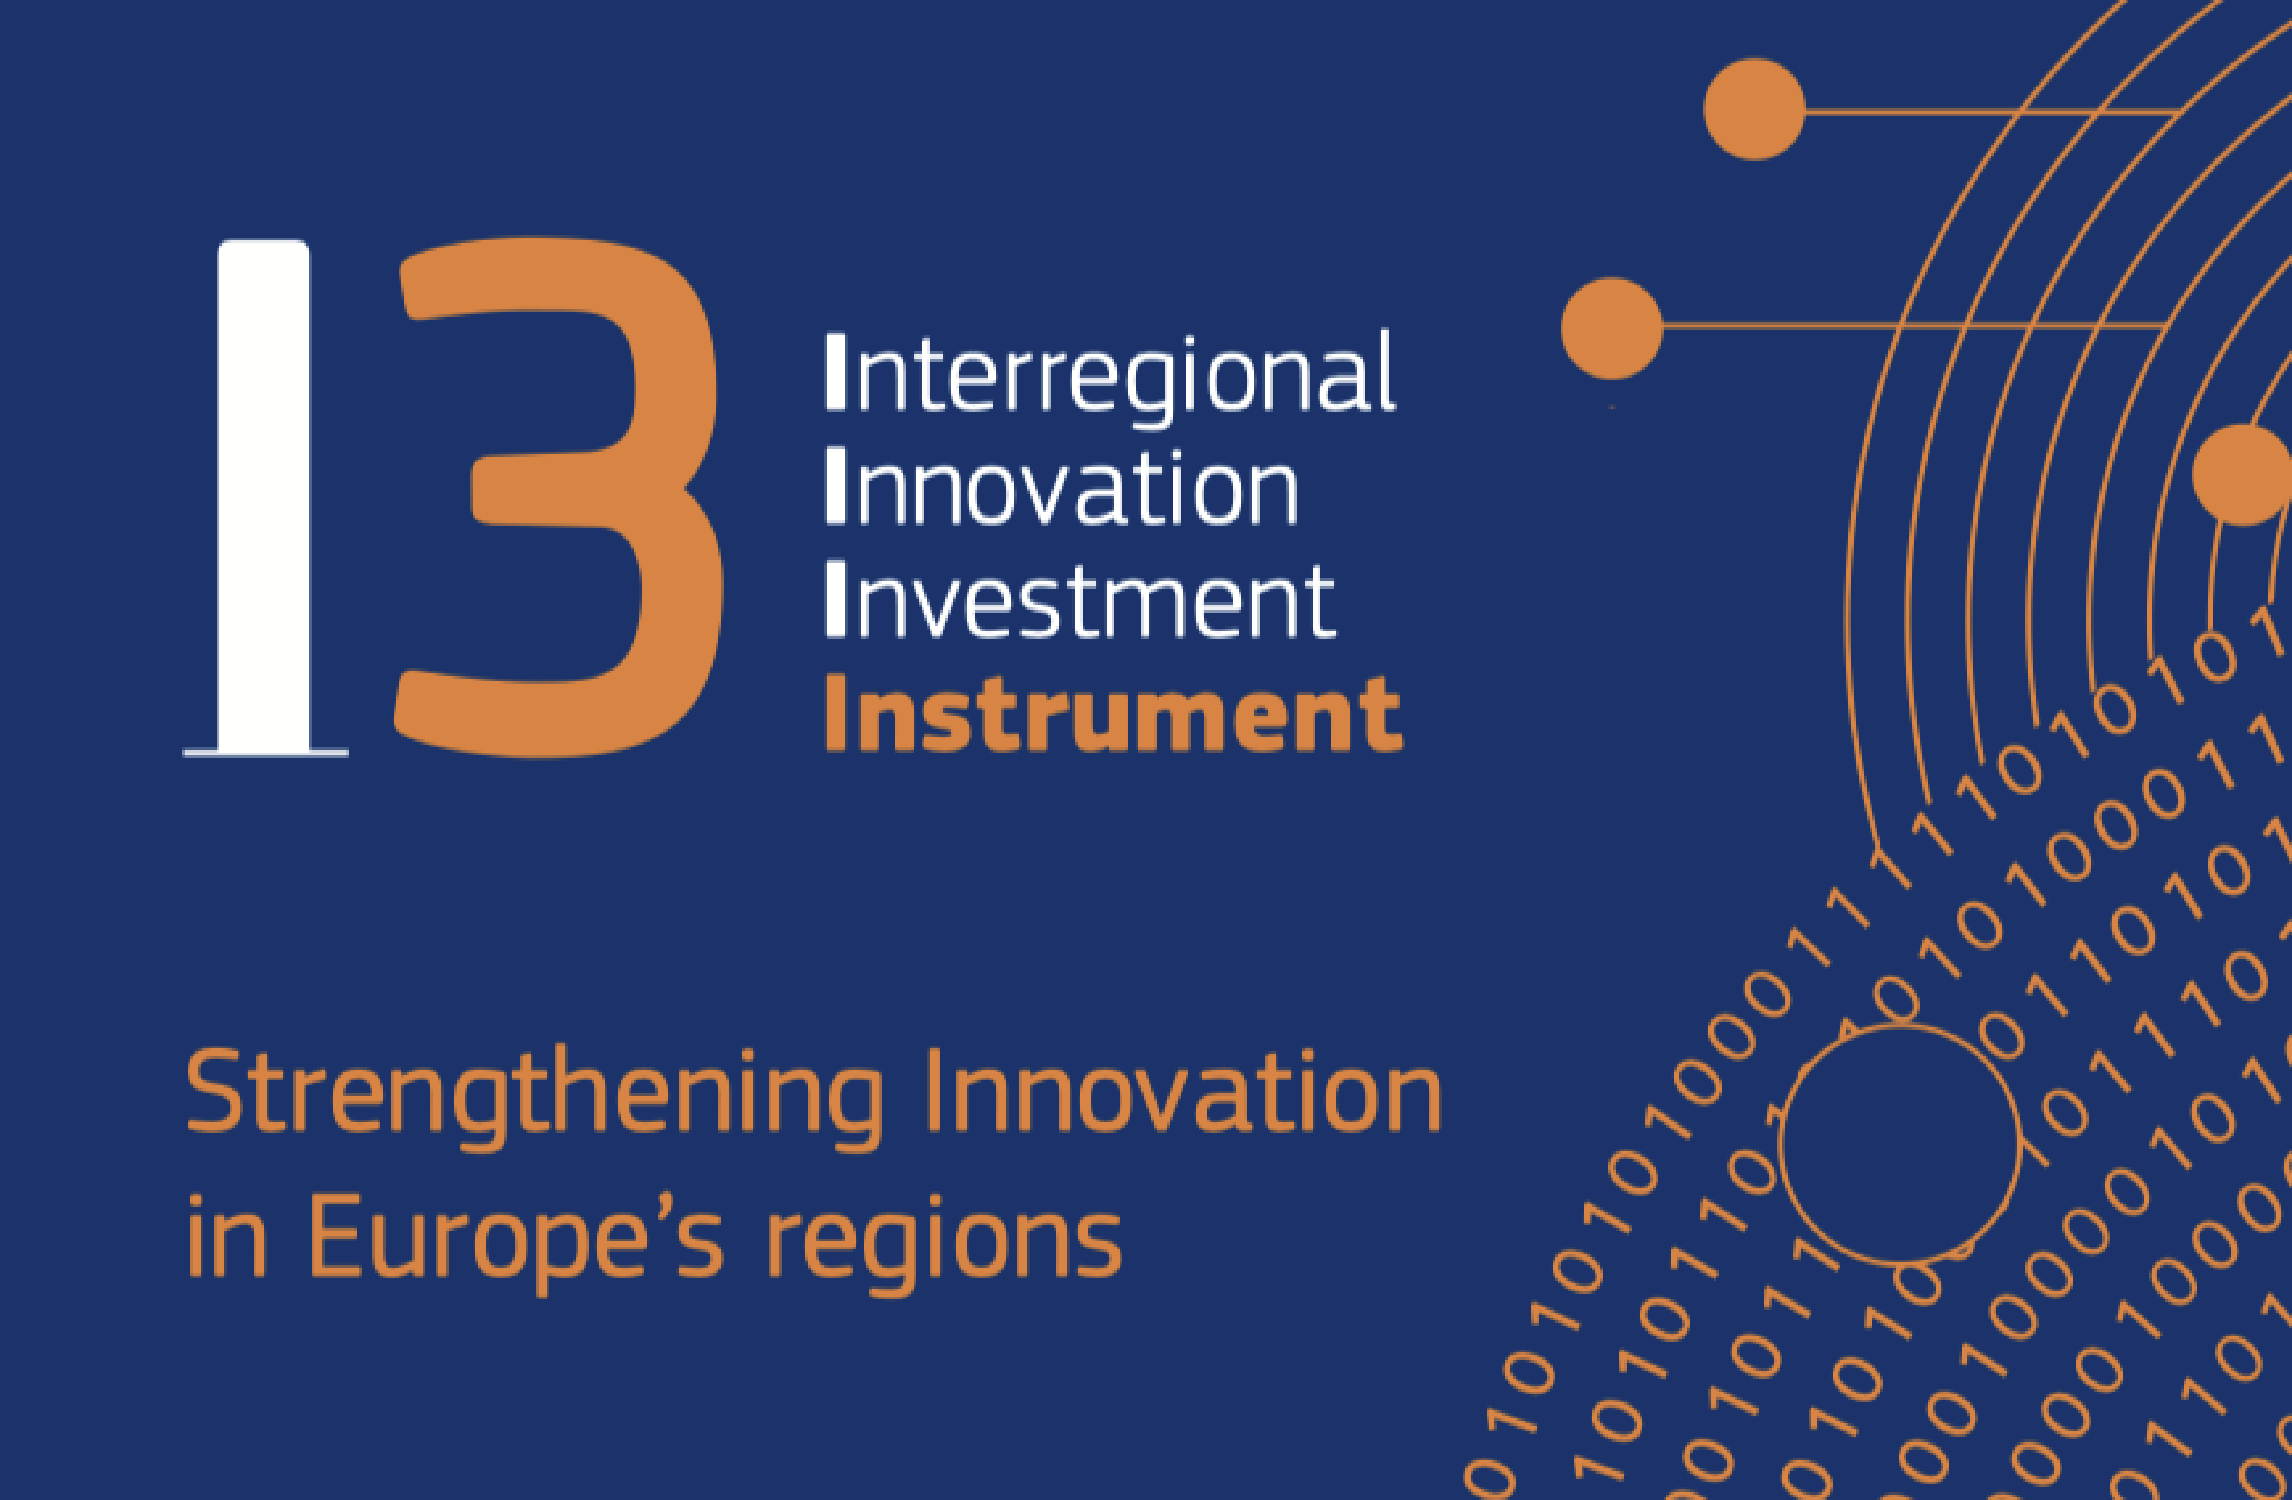 Investments into interregional innovation through I3 funding